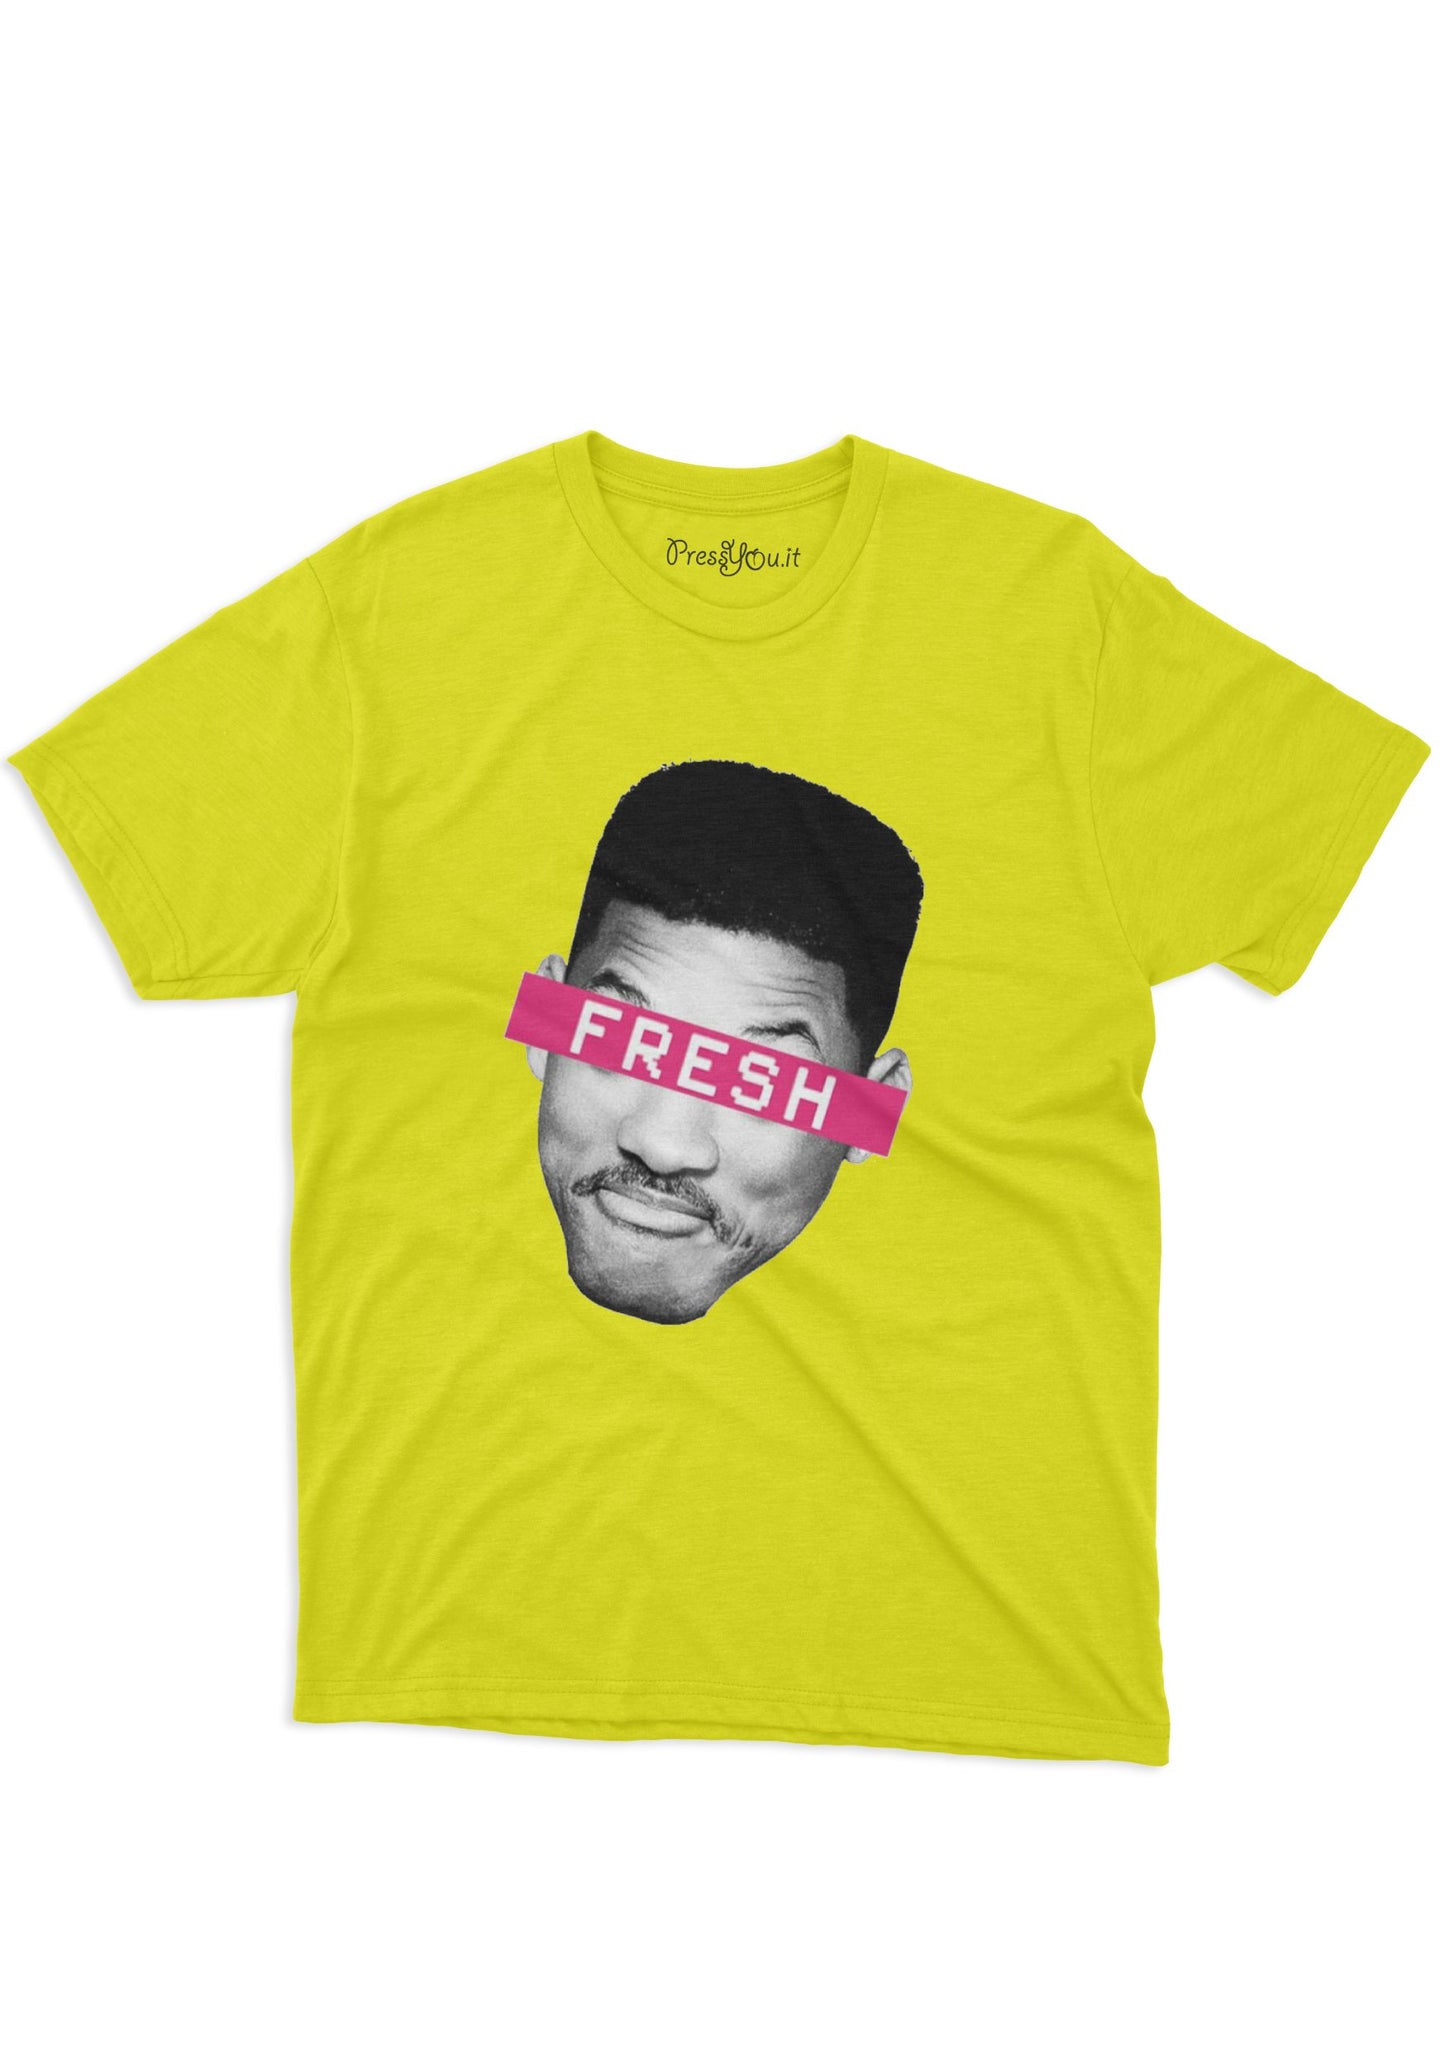 maglietta t-shirt- Willy fresh